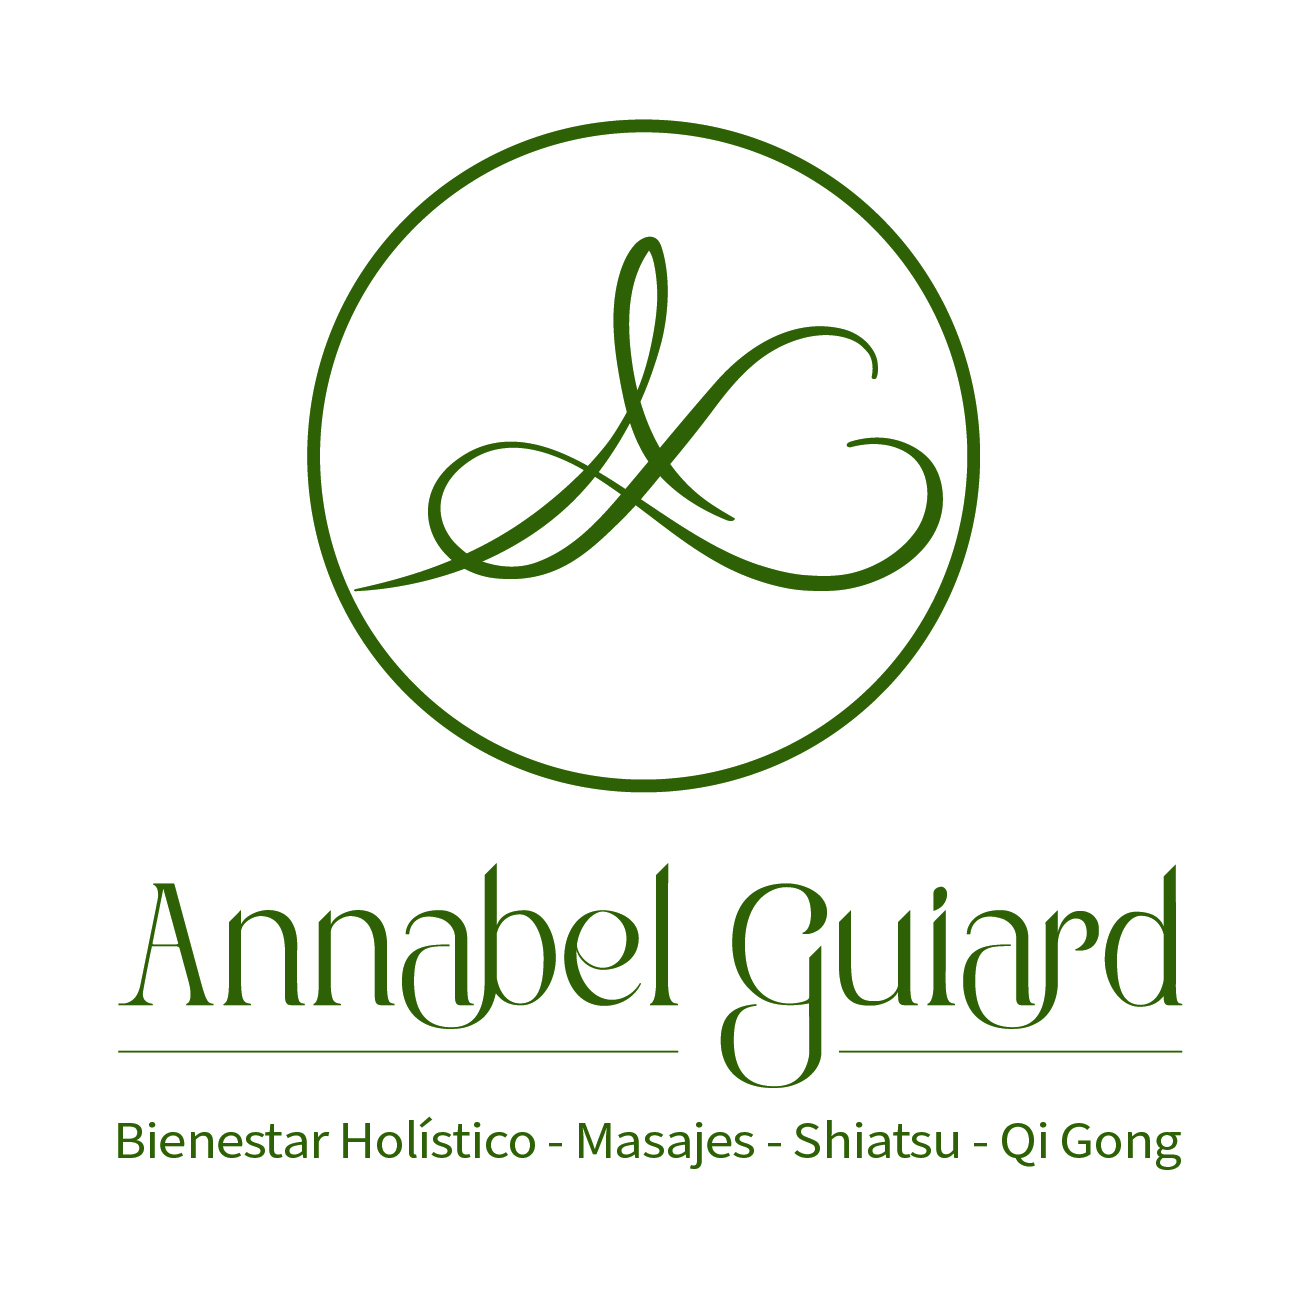 Annabel Guiard logo